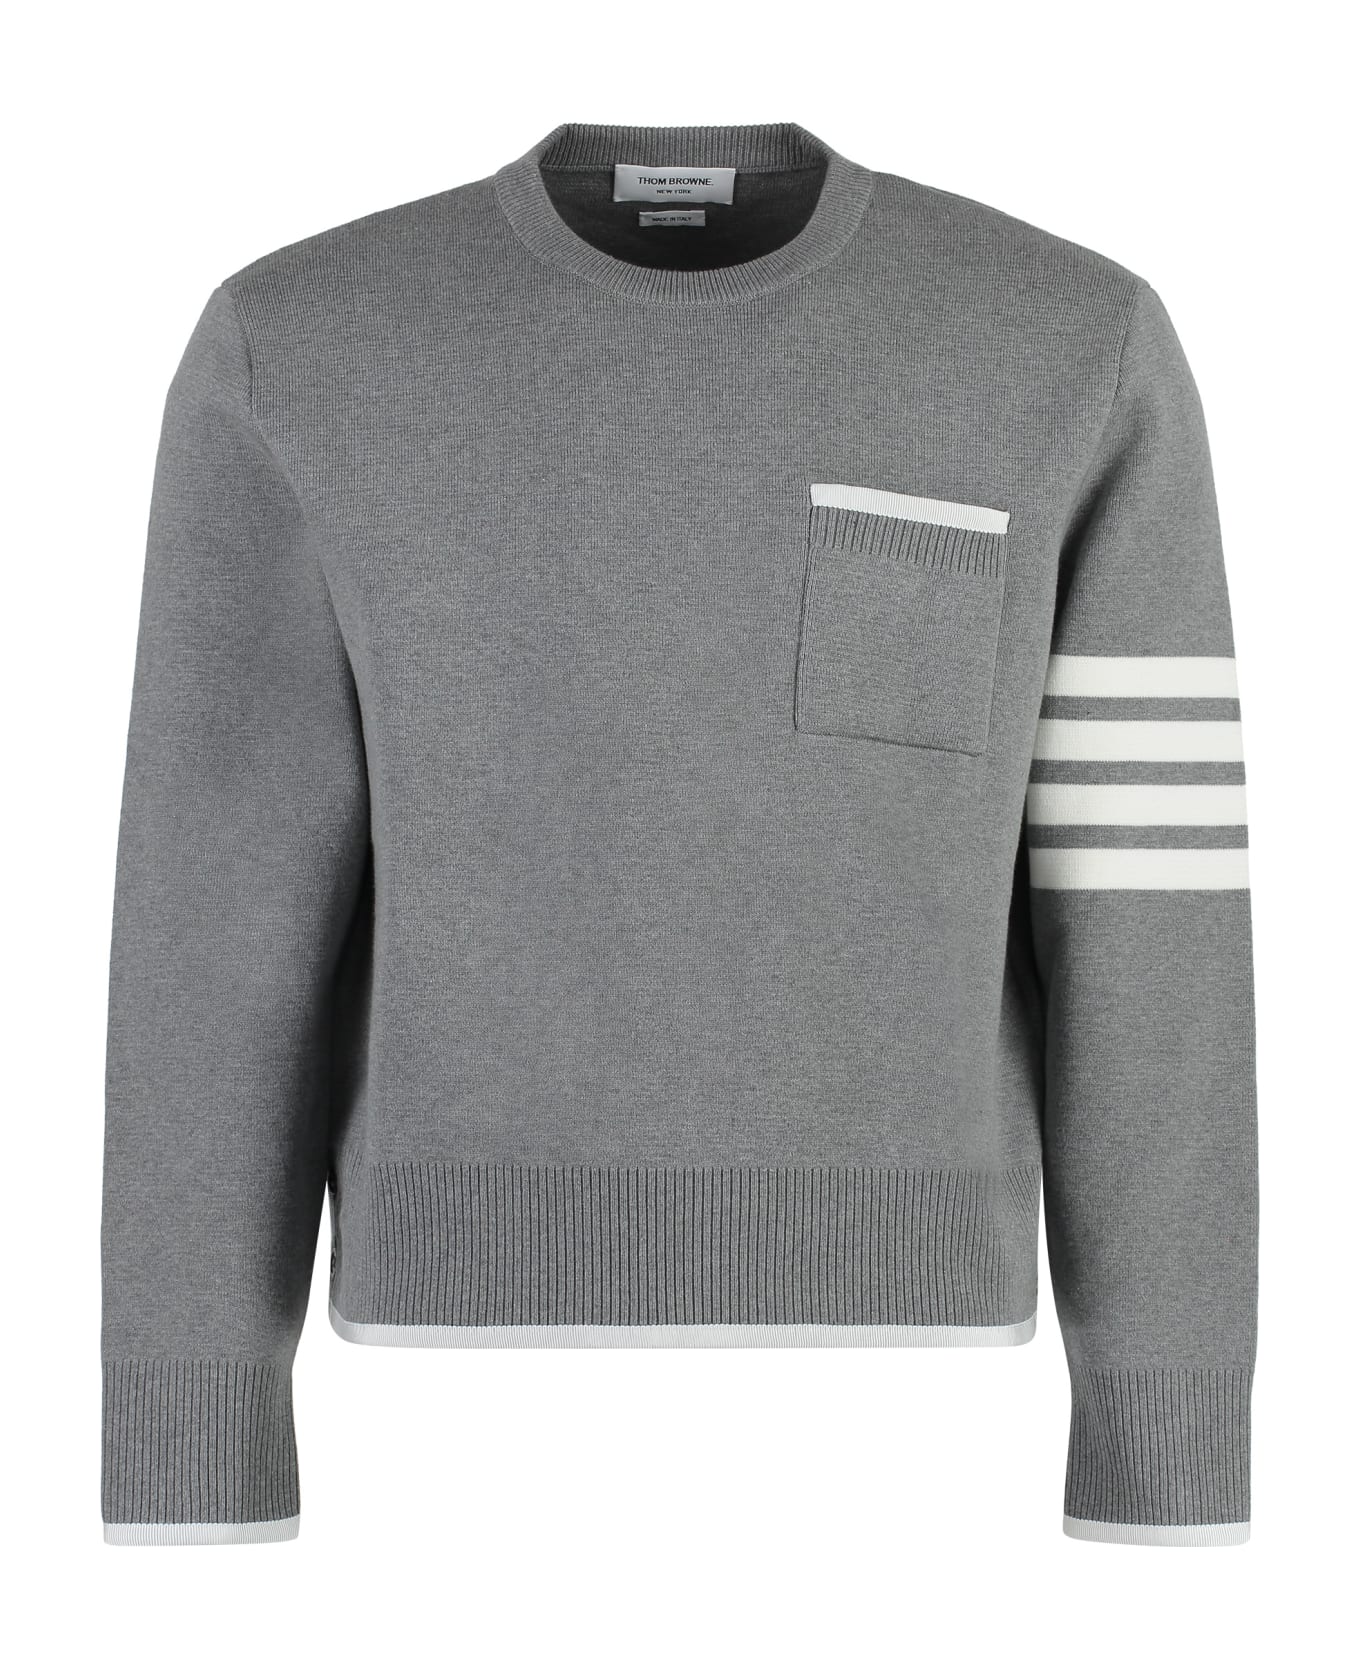 Thom Browne Cotton Crew-neck Sweater - grey ニットウェア